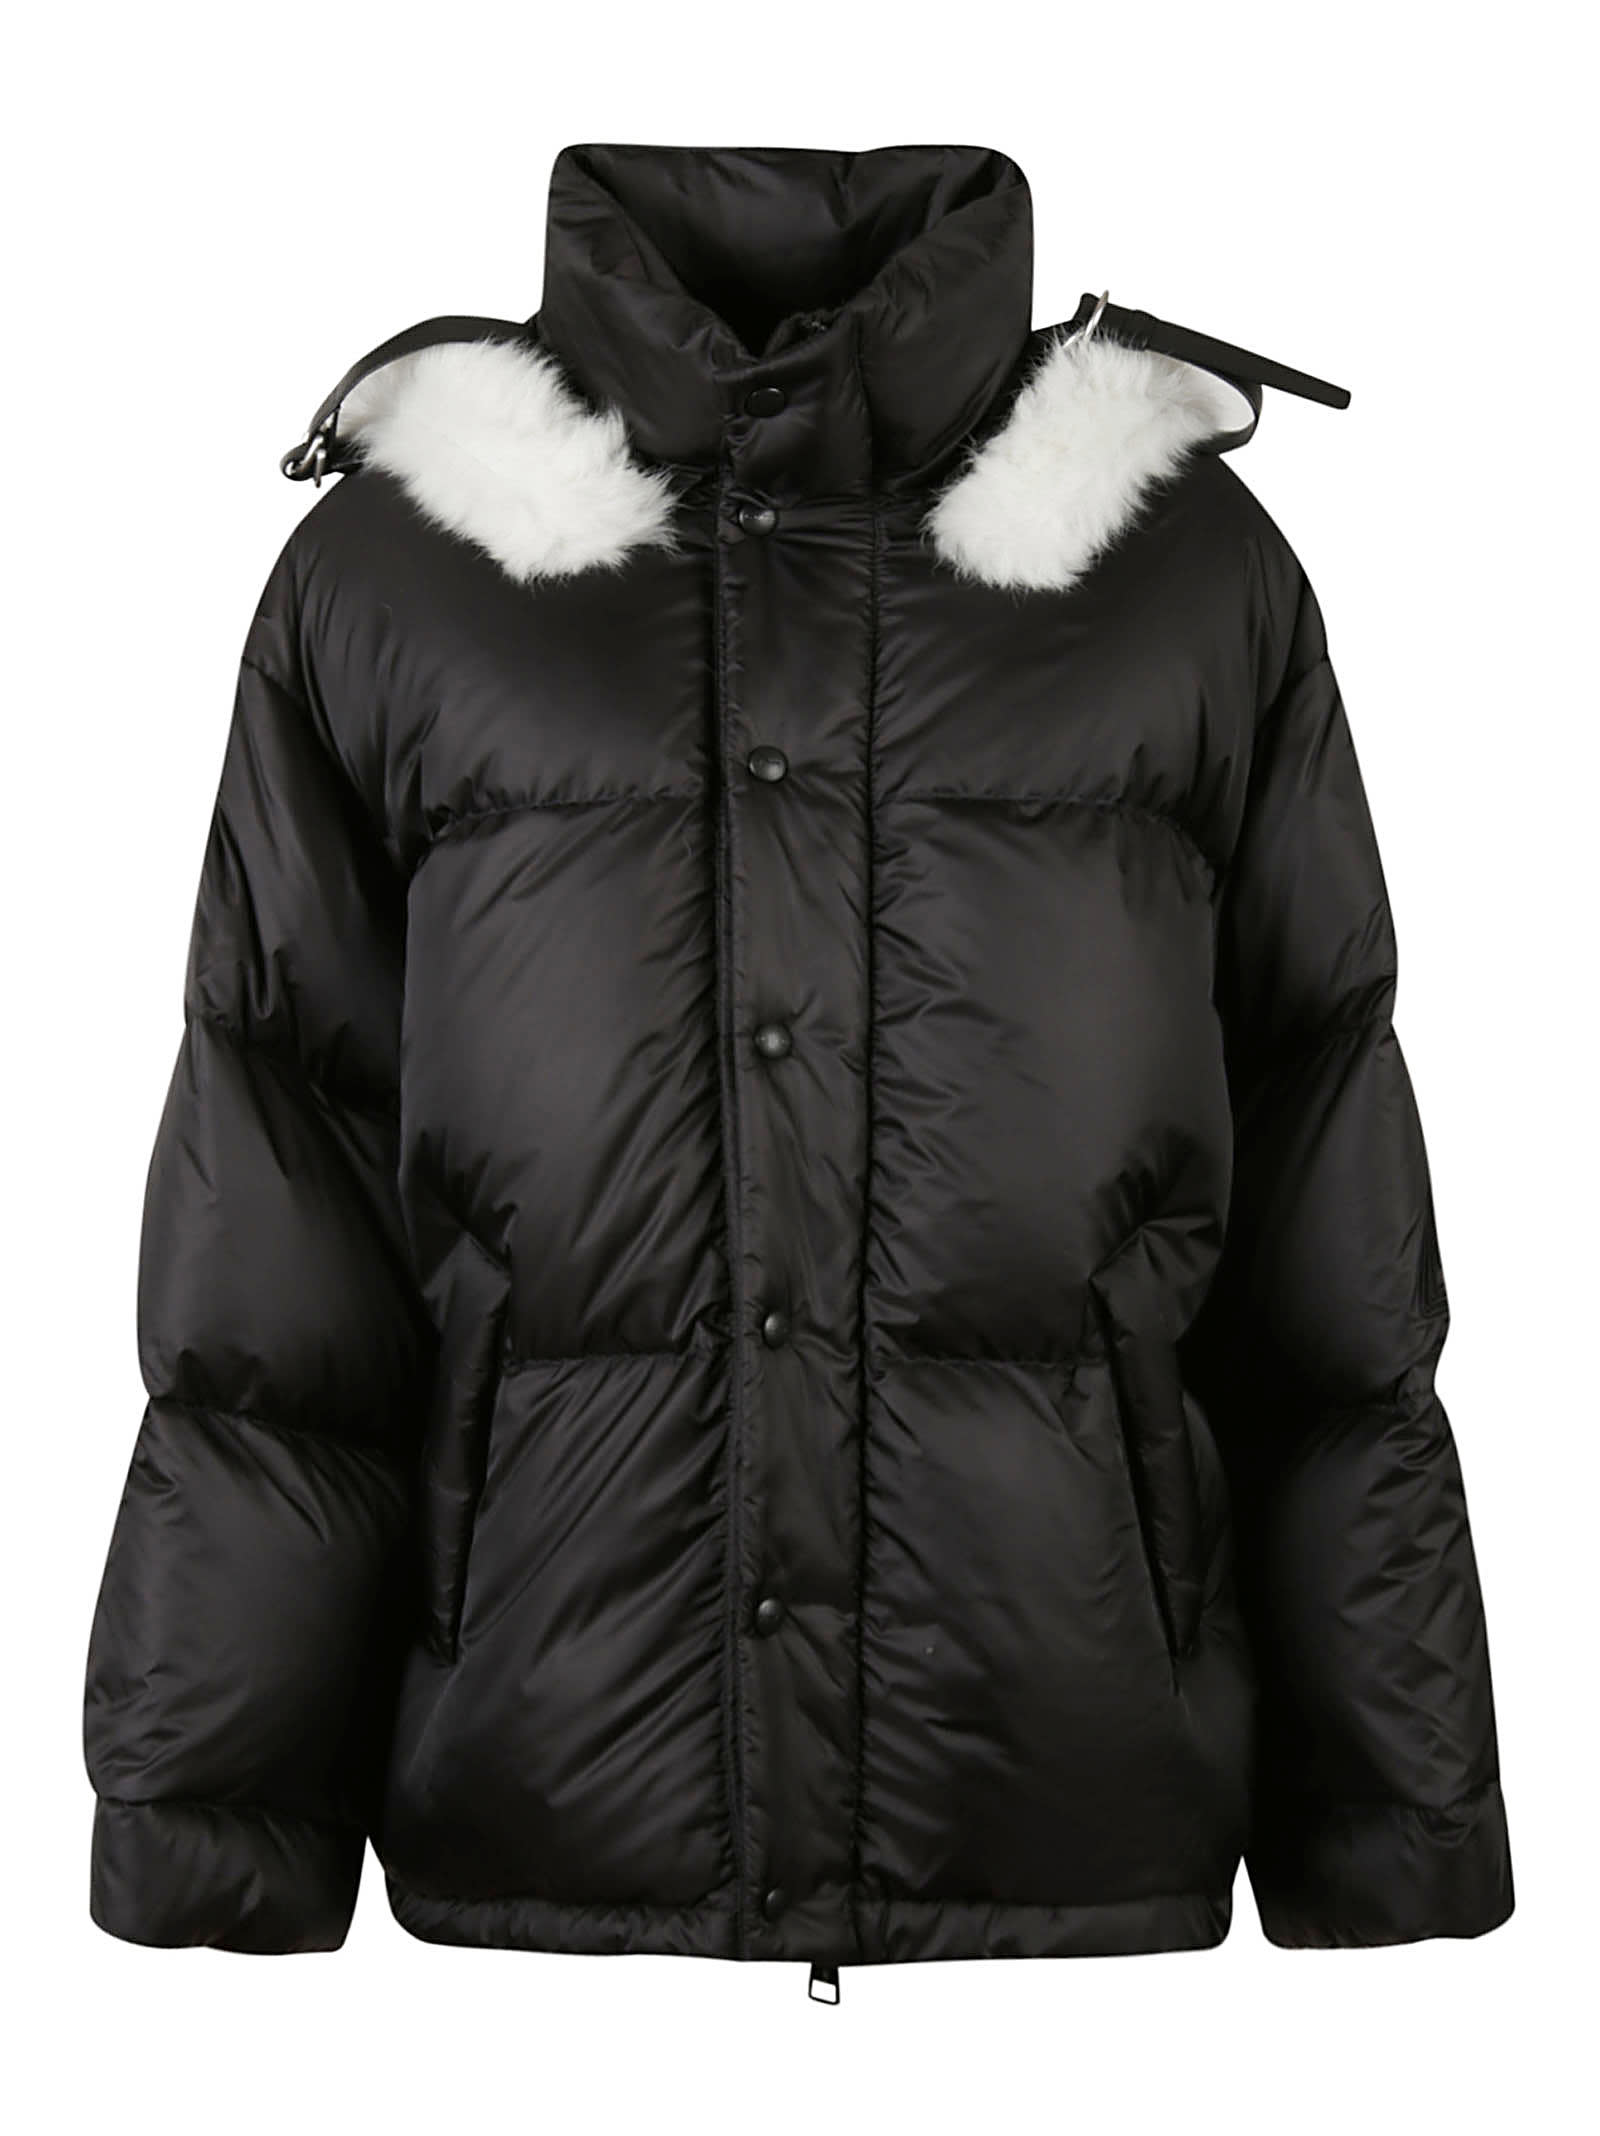 Lanvin Fur Applique High-neck Puffer Jacket